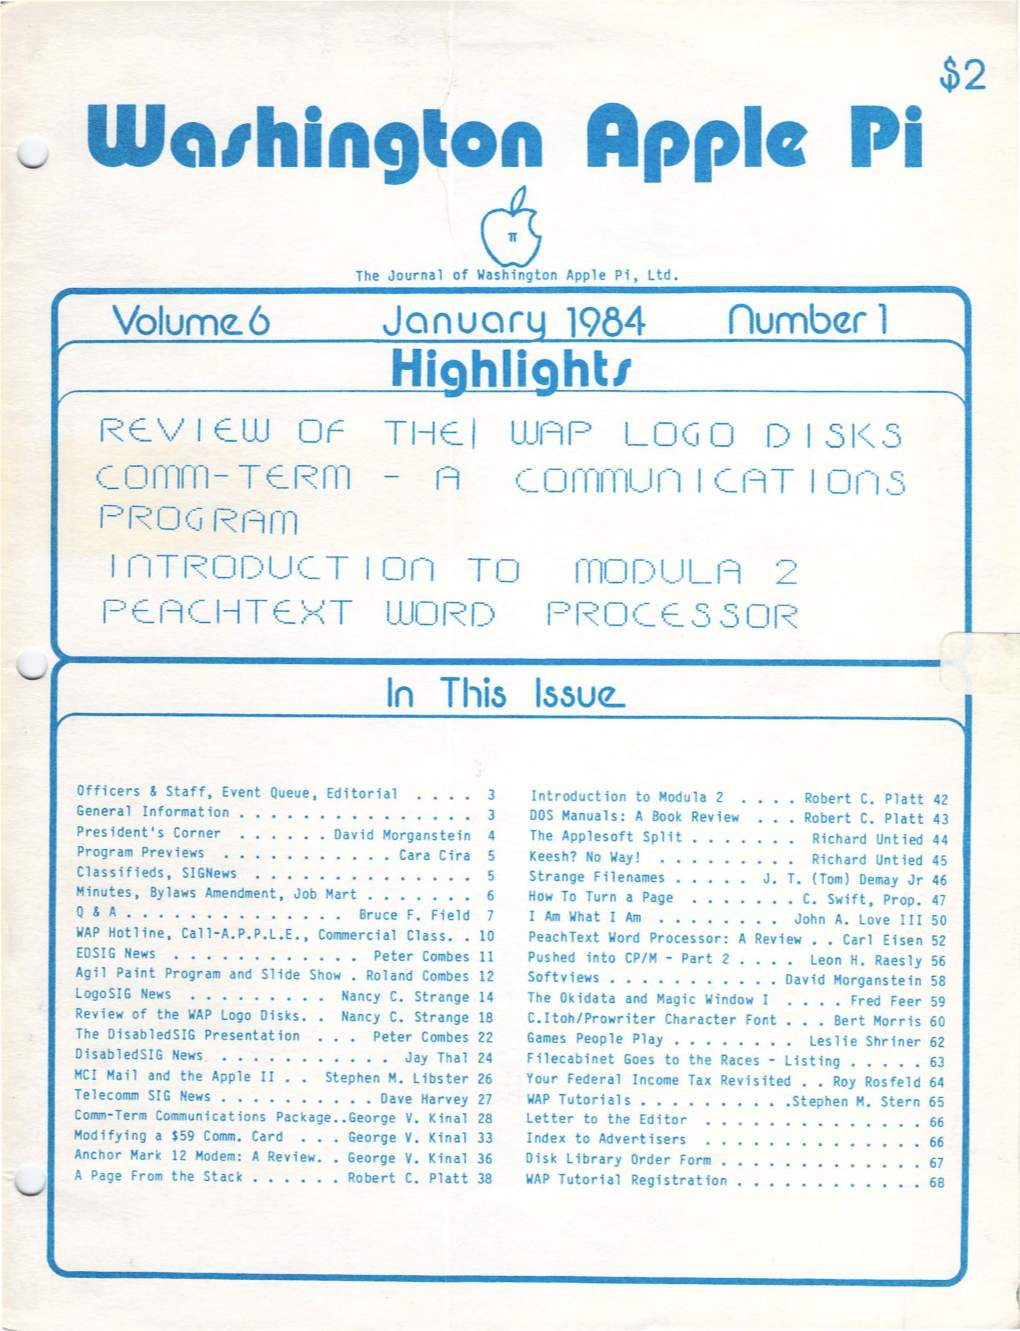 Washington Apple Pi Journal, January 1984